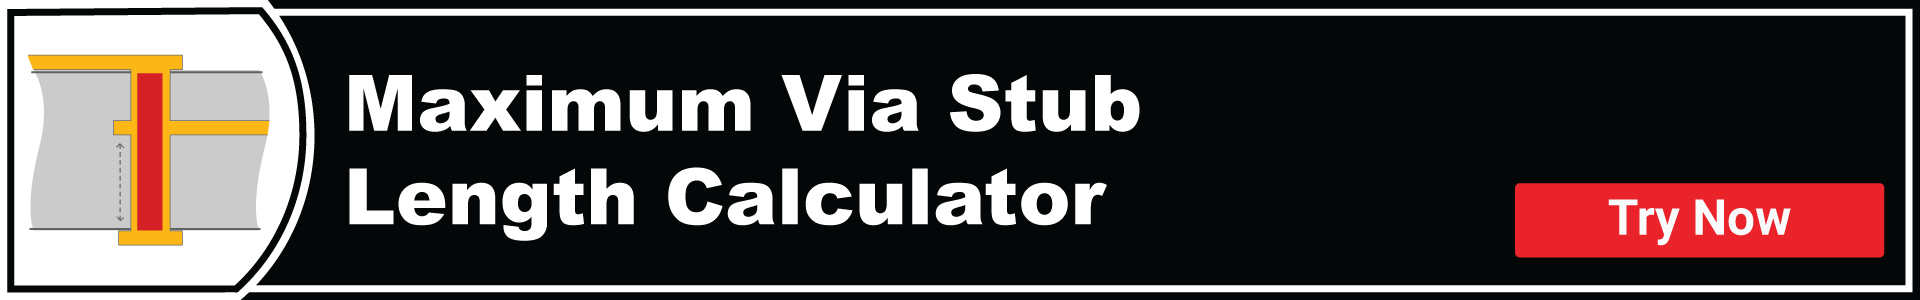 Maximum Via Stub Length Calculator